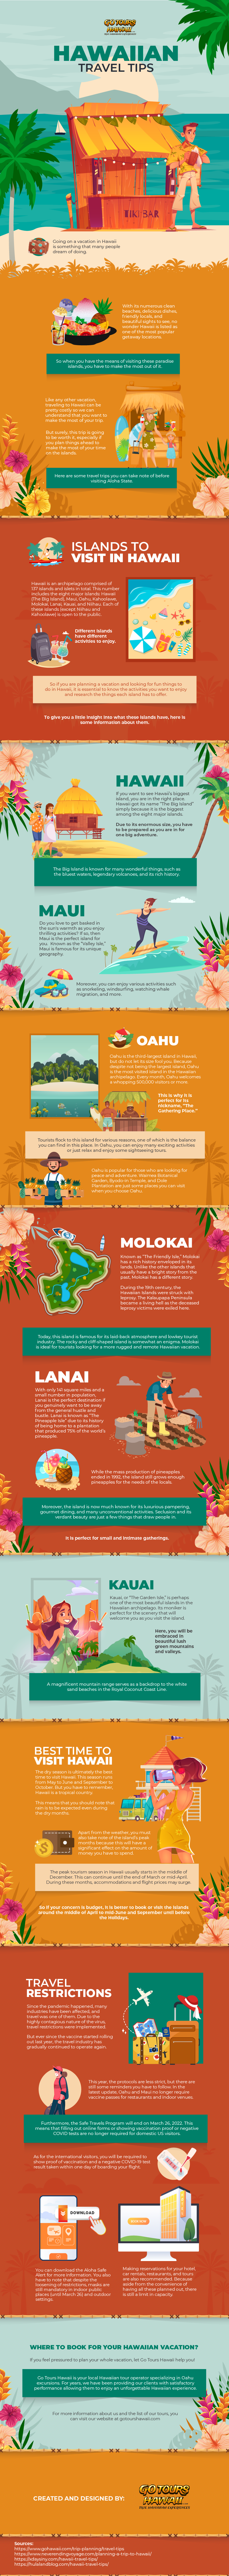 Hawaiian Travel Tips - Infographic Image